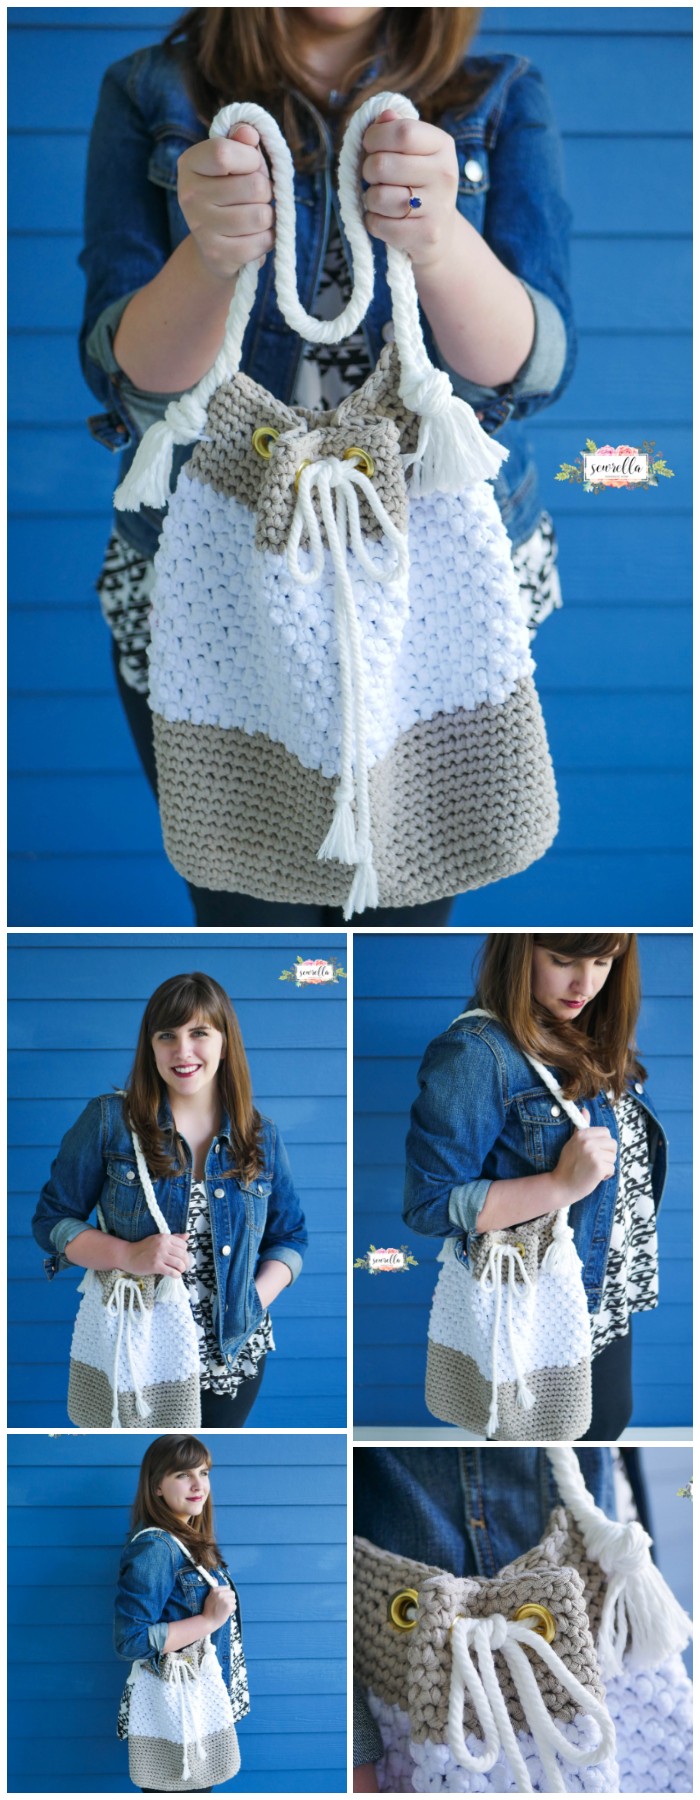 The Mykonos Crochet Bag